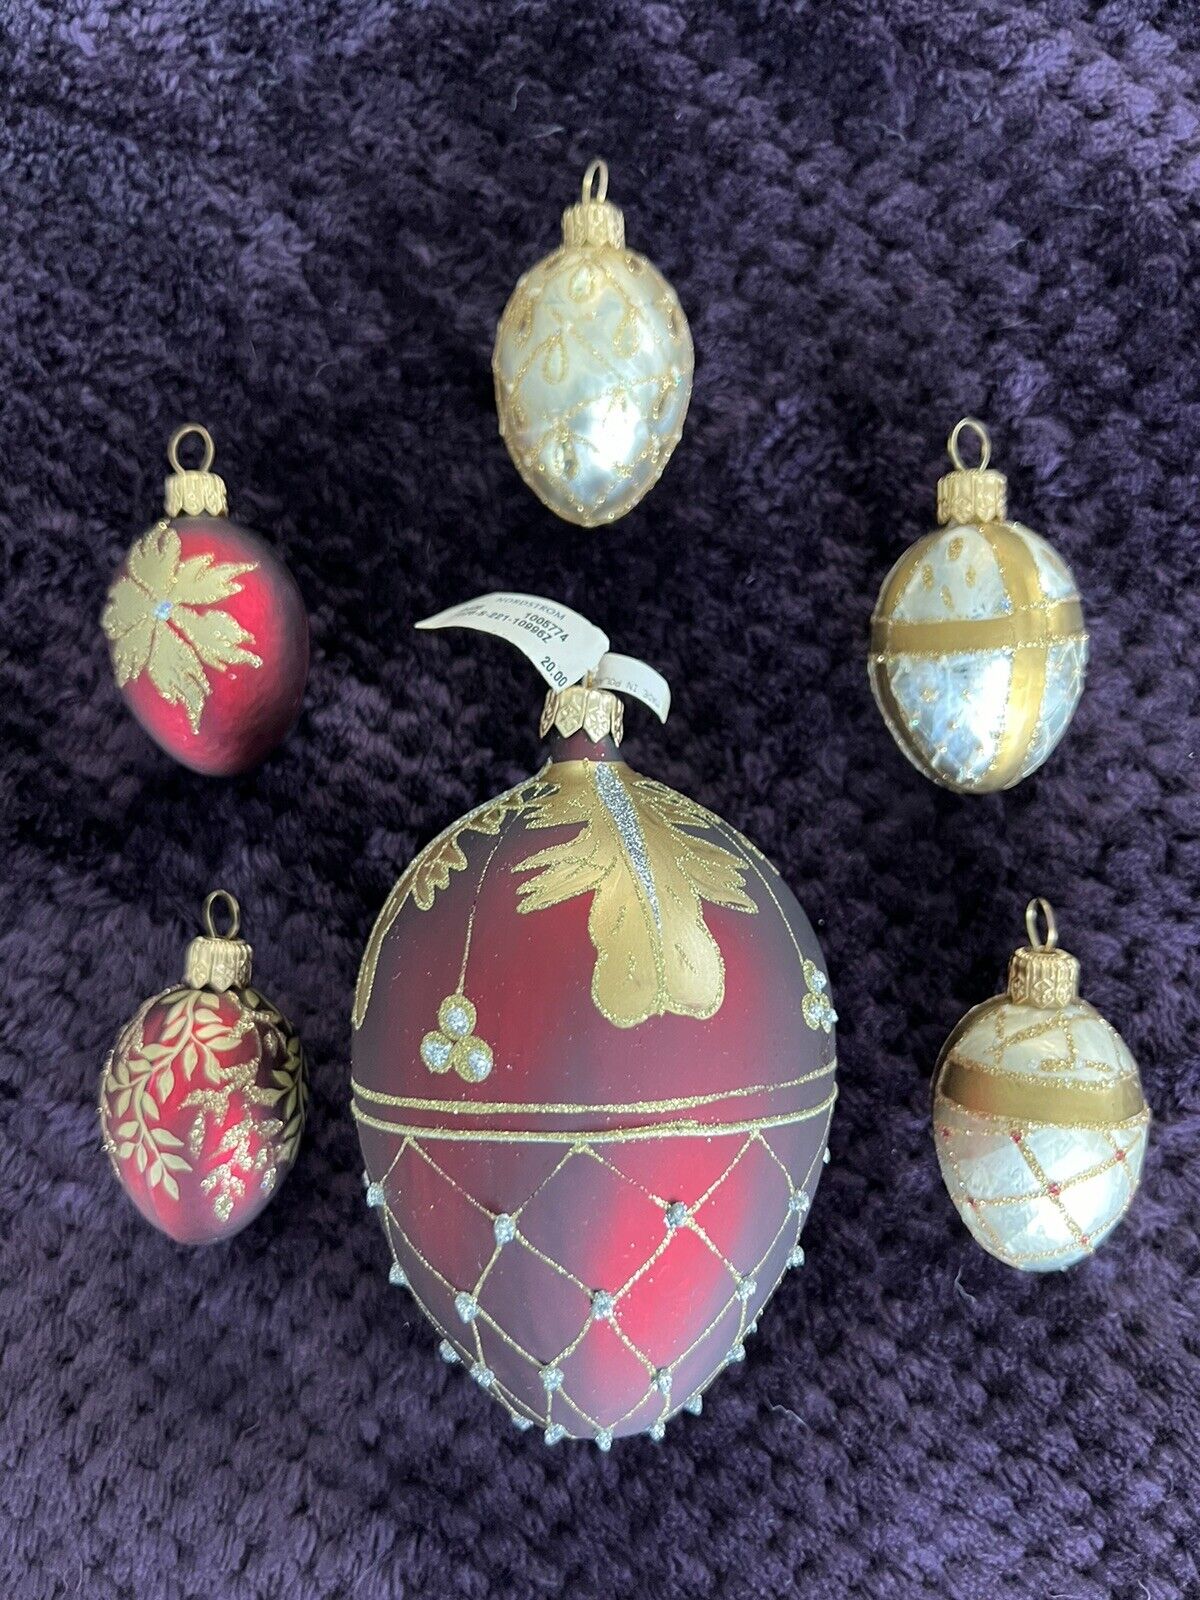 New Faberge Inspired Egg Christmas Ornament Set 6 Burgundy Gold Blown Glass